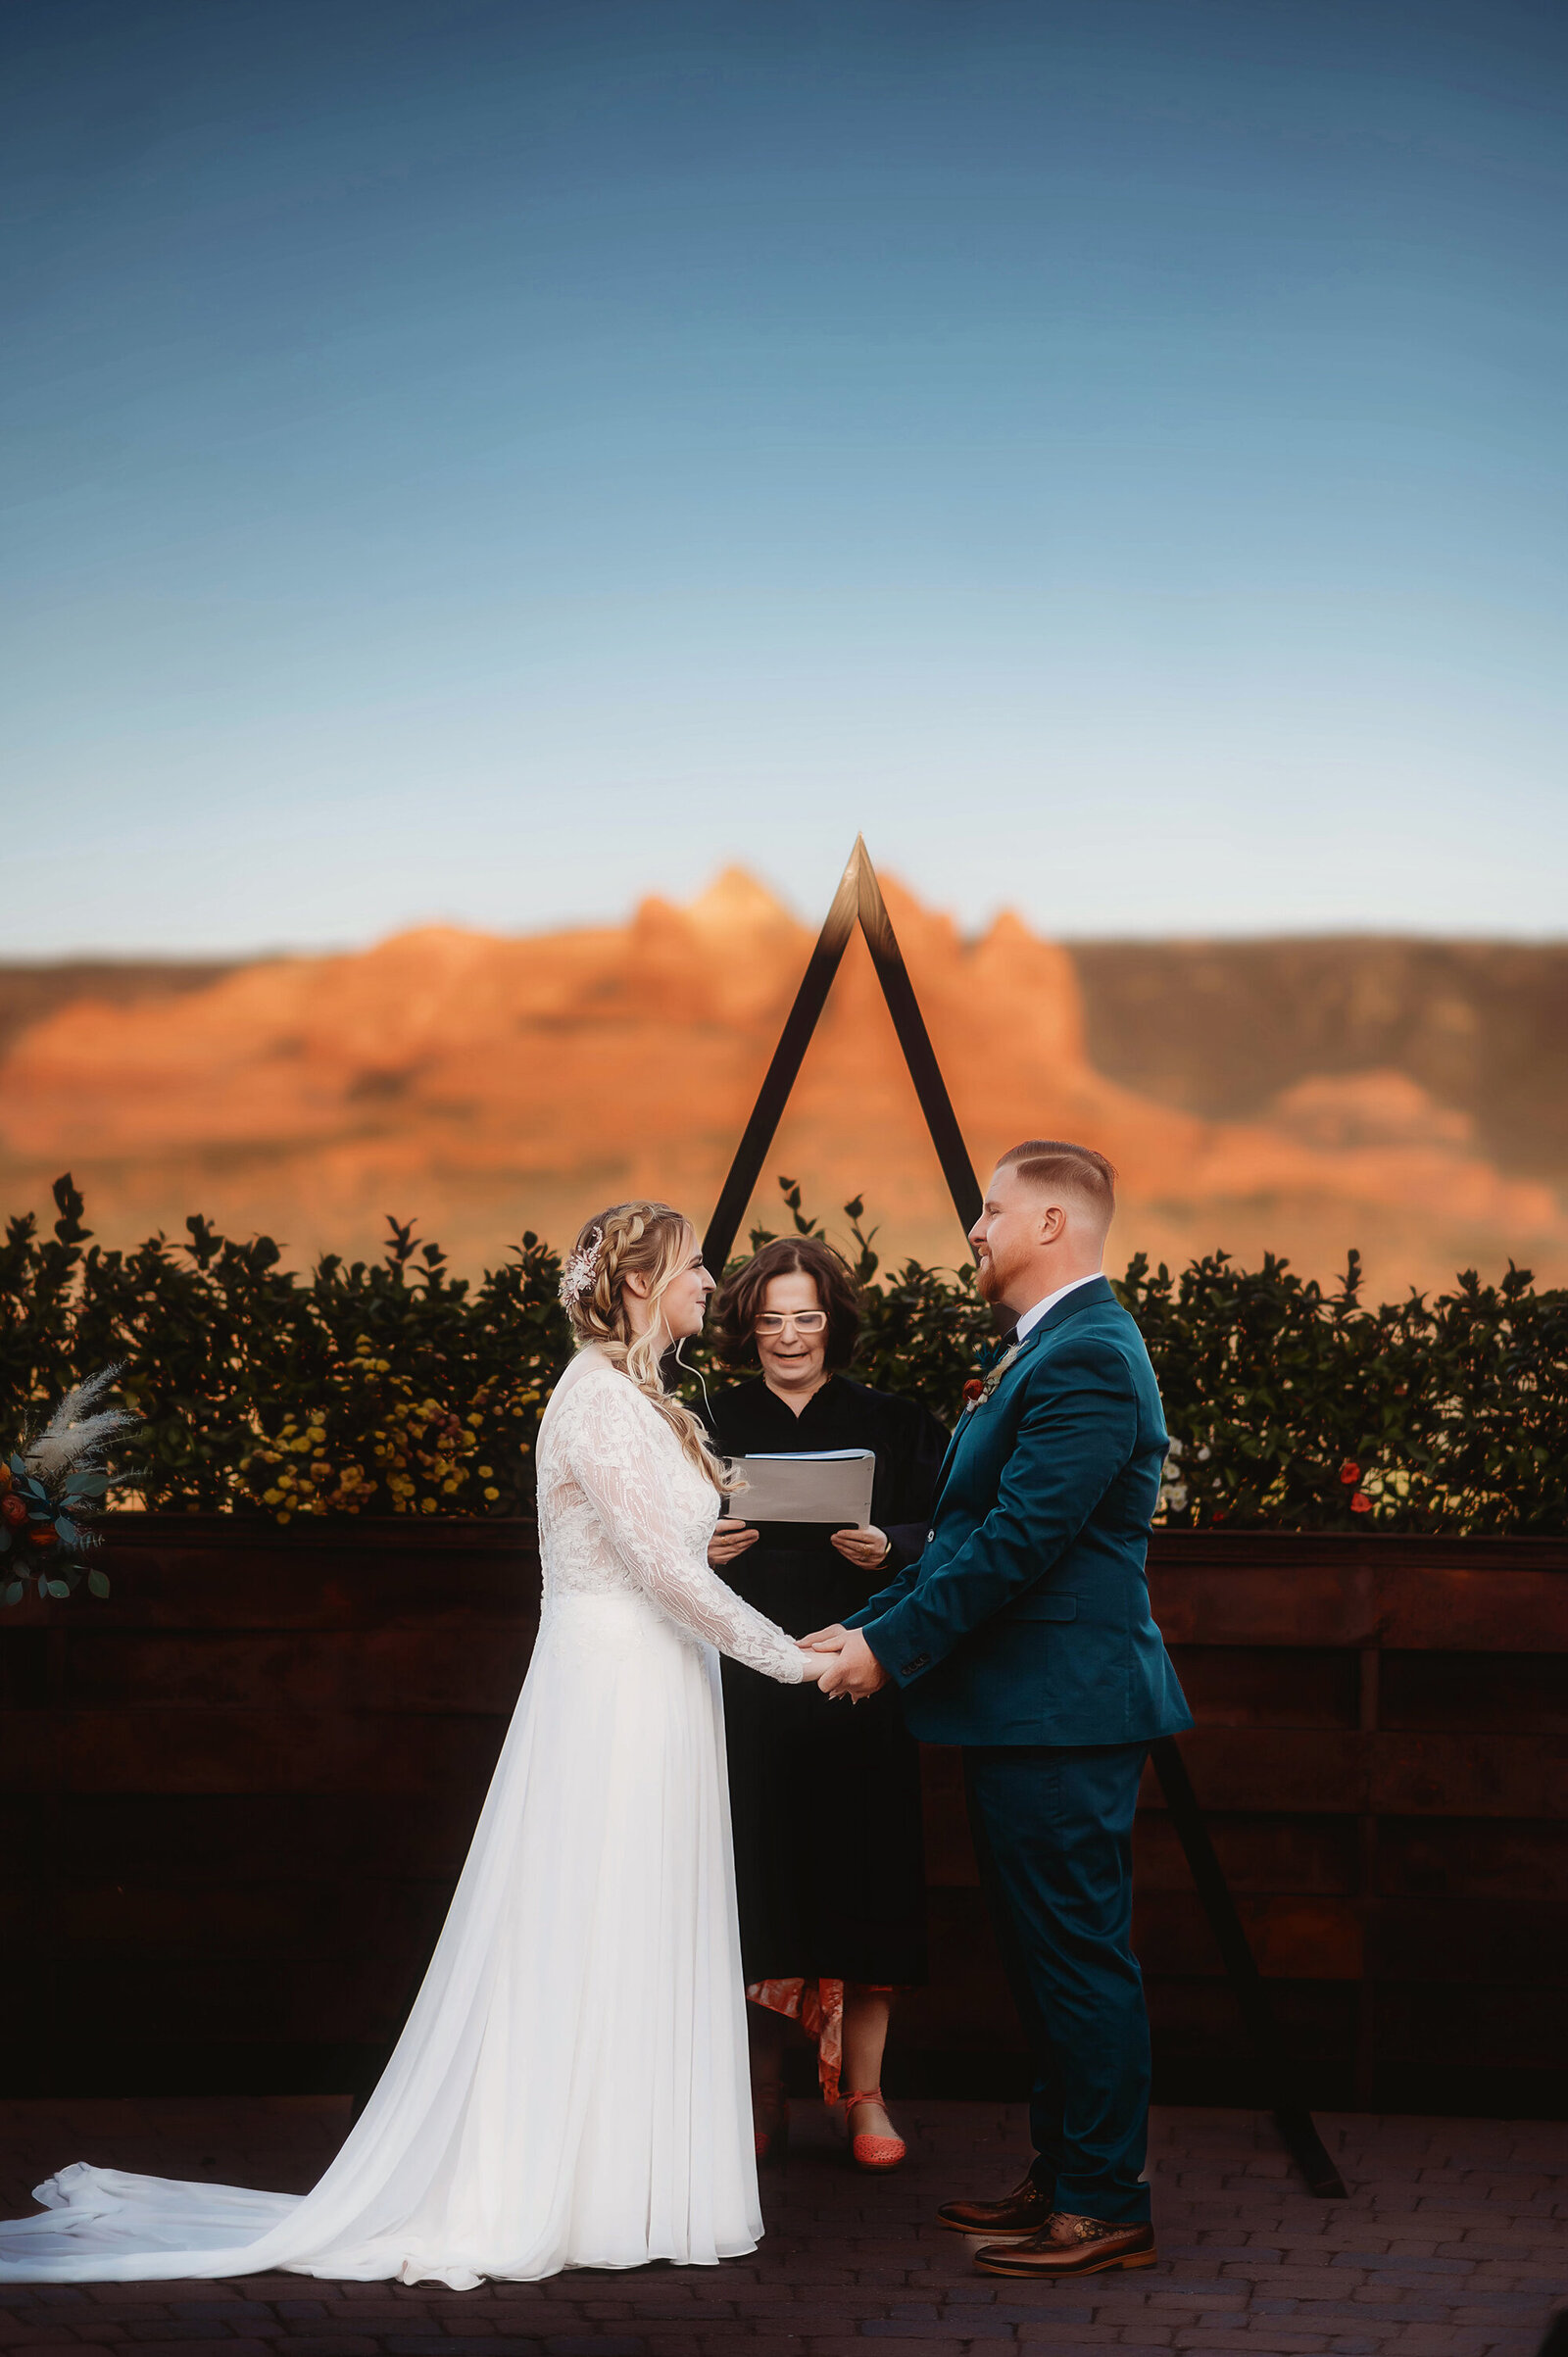 Bride & Groom exchange vows during their Elopement in Sedona, AZ.